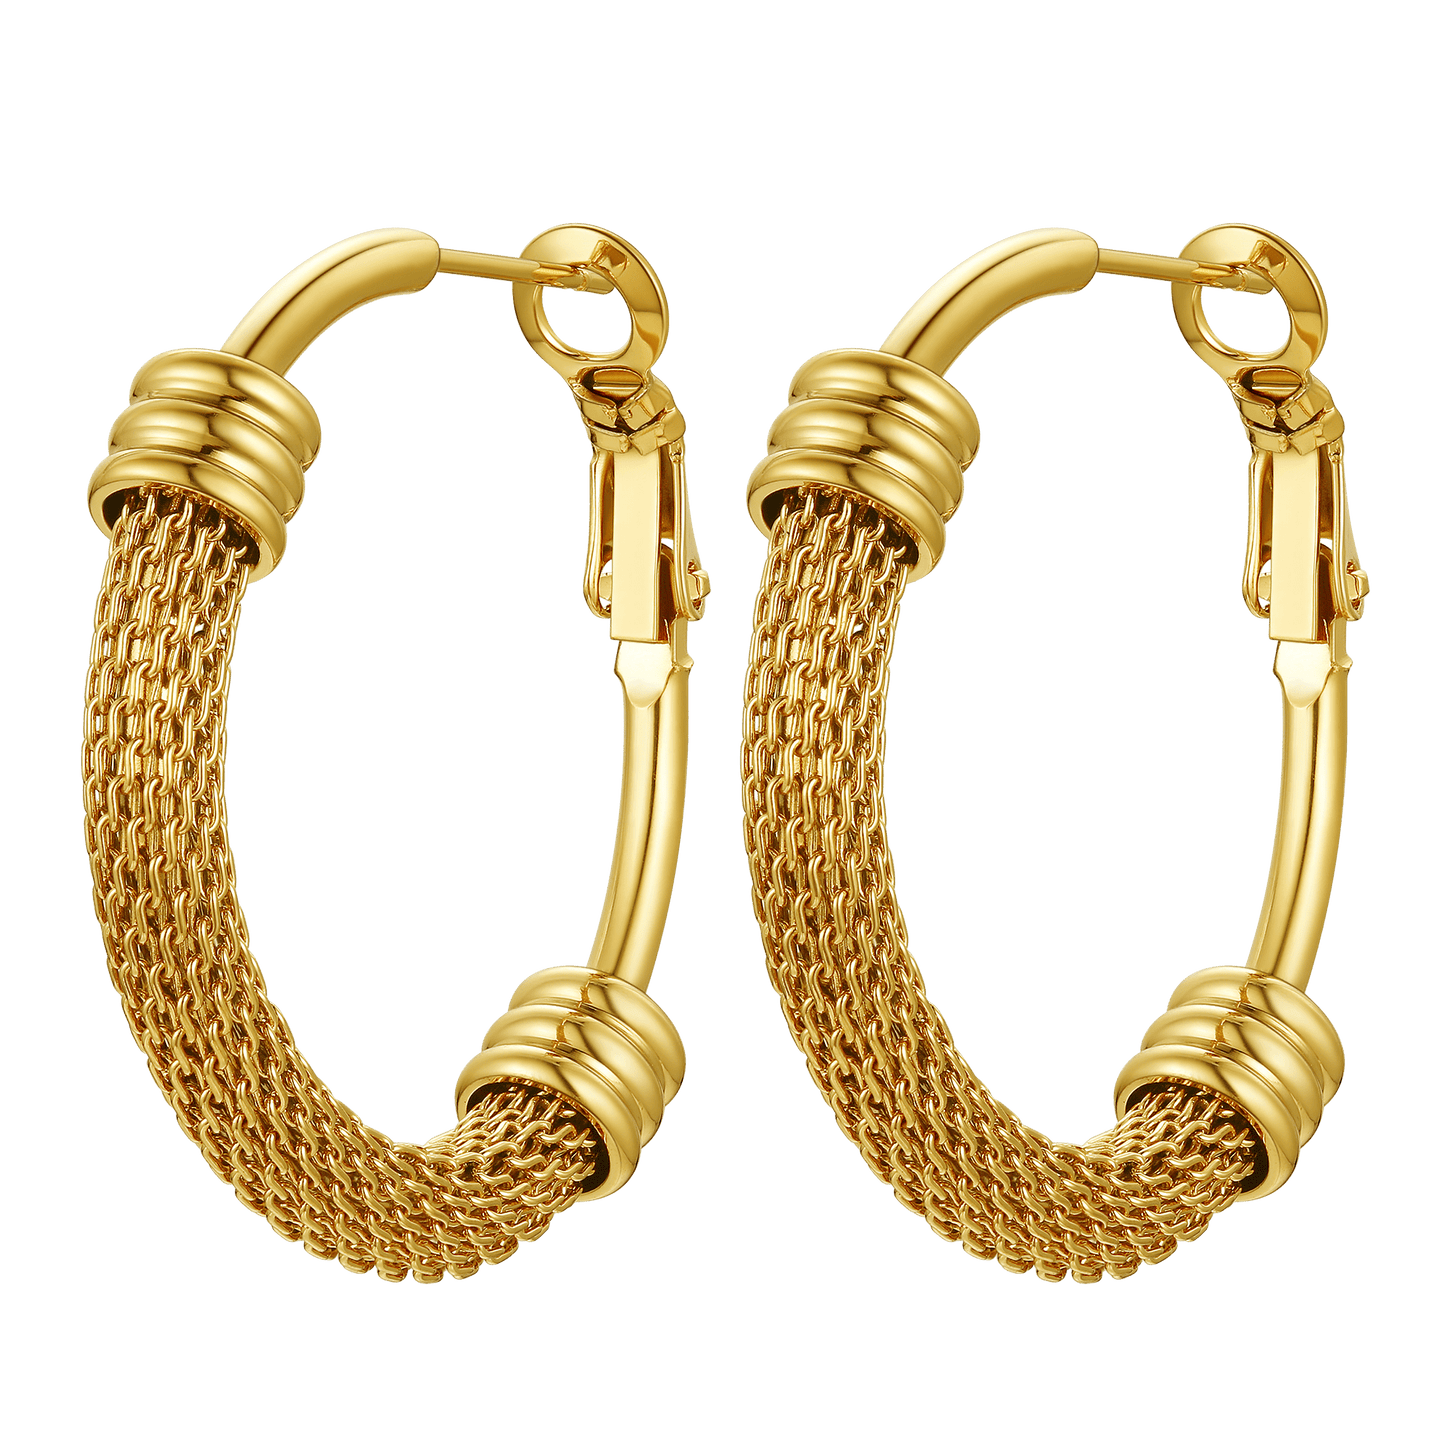 PROSTEEL Gold Plated Hoop Hinged Earrings for Women Hypoallergenic Stainless Steel